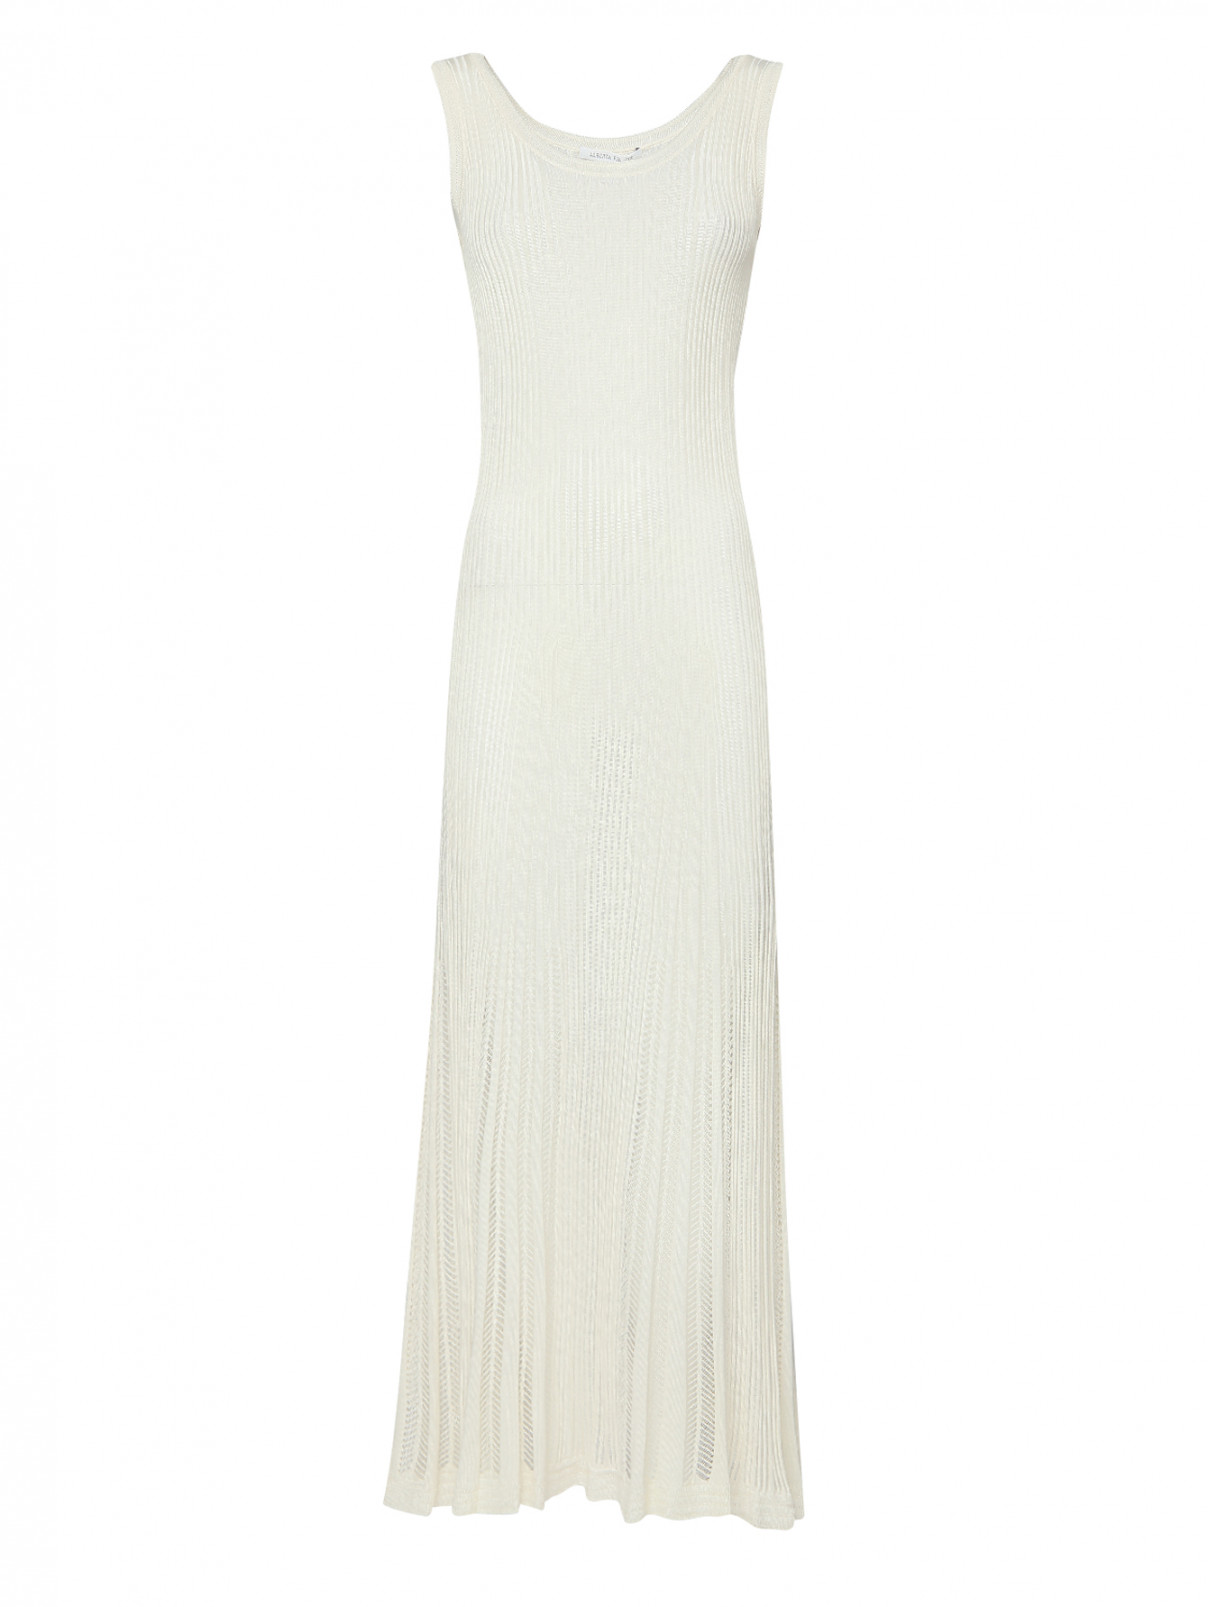 Платье-макси из шелка без рукавов Alberta Ferretti  –  Общий вид  – Цвет:  Белый